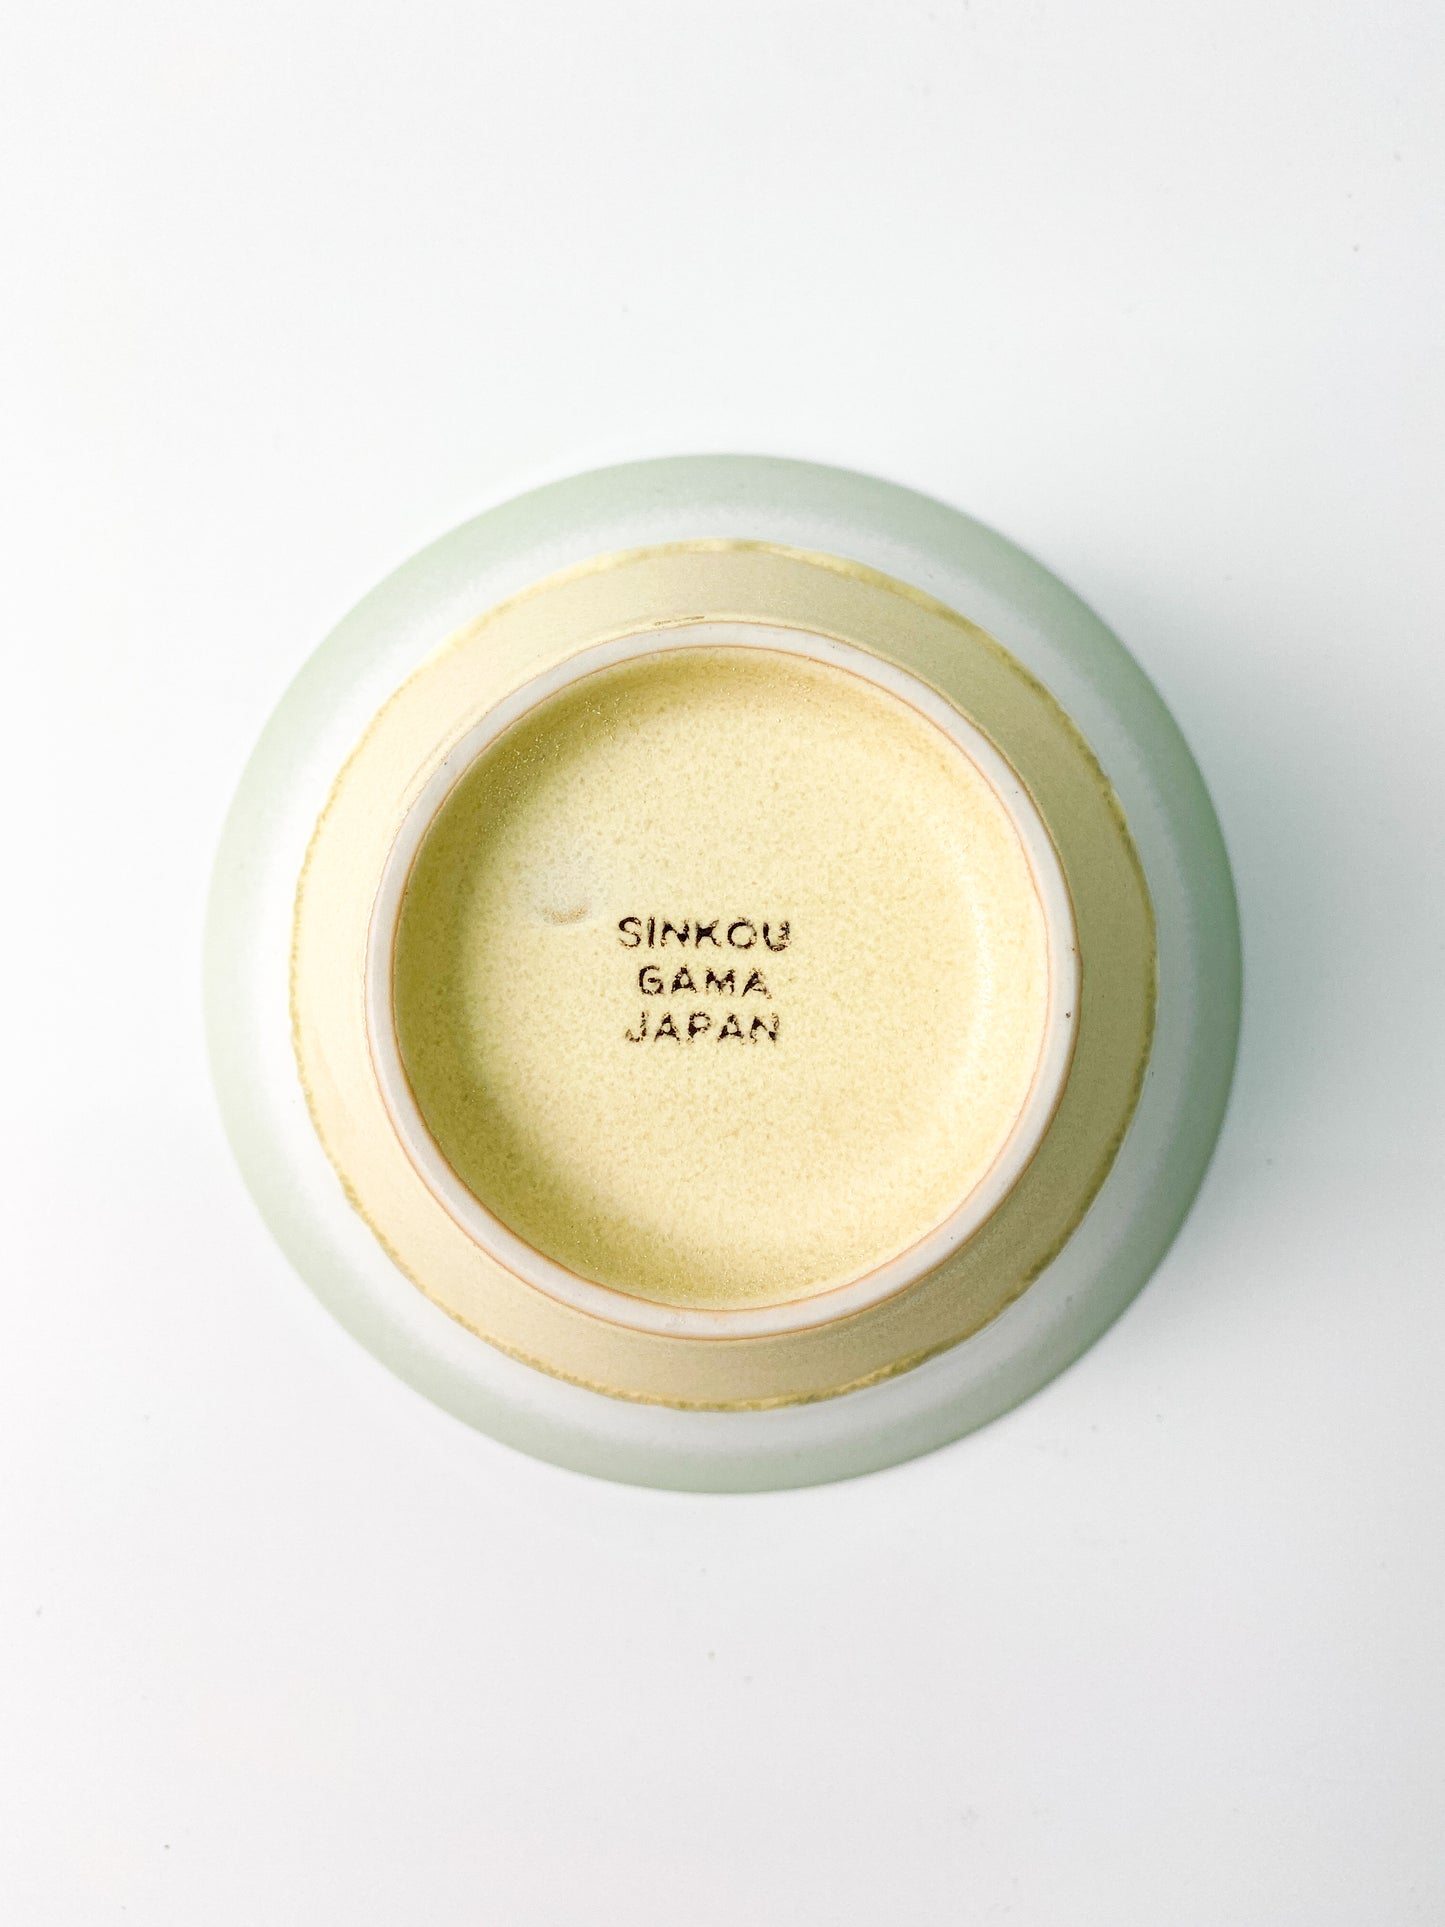 日本製美濃燒 伸光窯粉彩湯碗 (奶油綠色) | Japanese Mino Ware Shinko Kiln Pastel Noodle Bowl (Cream x Green)